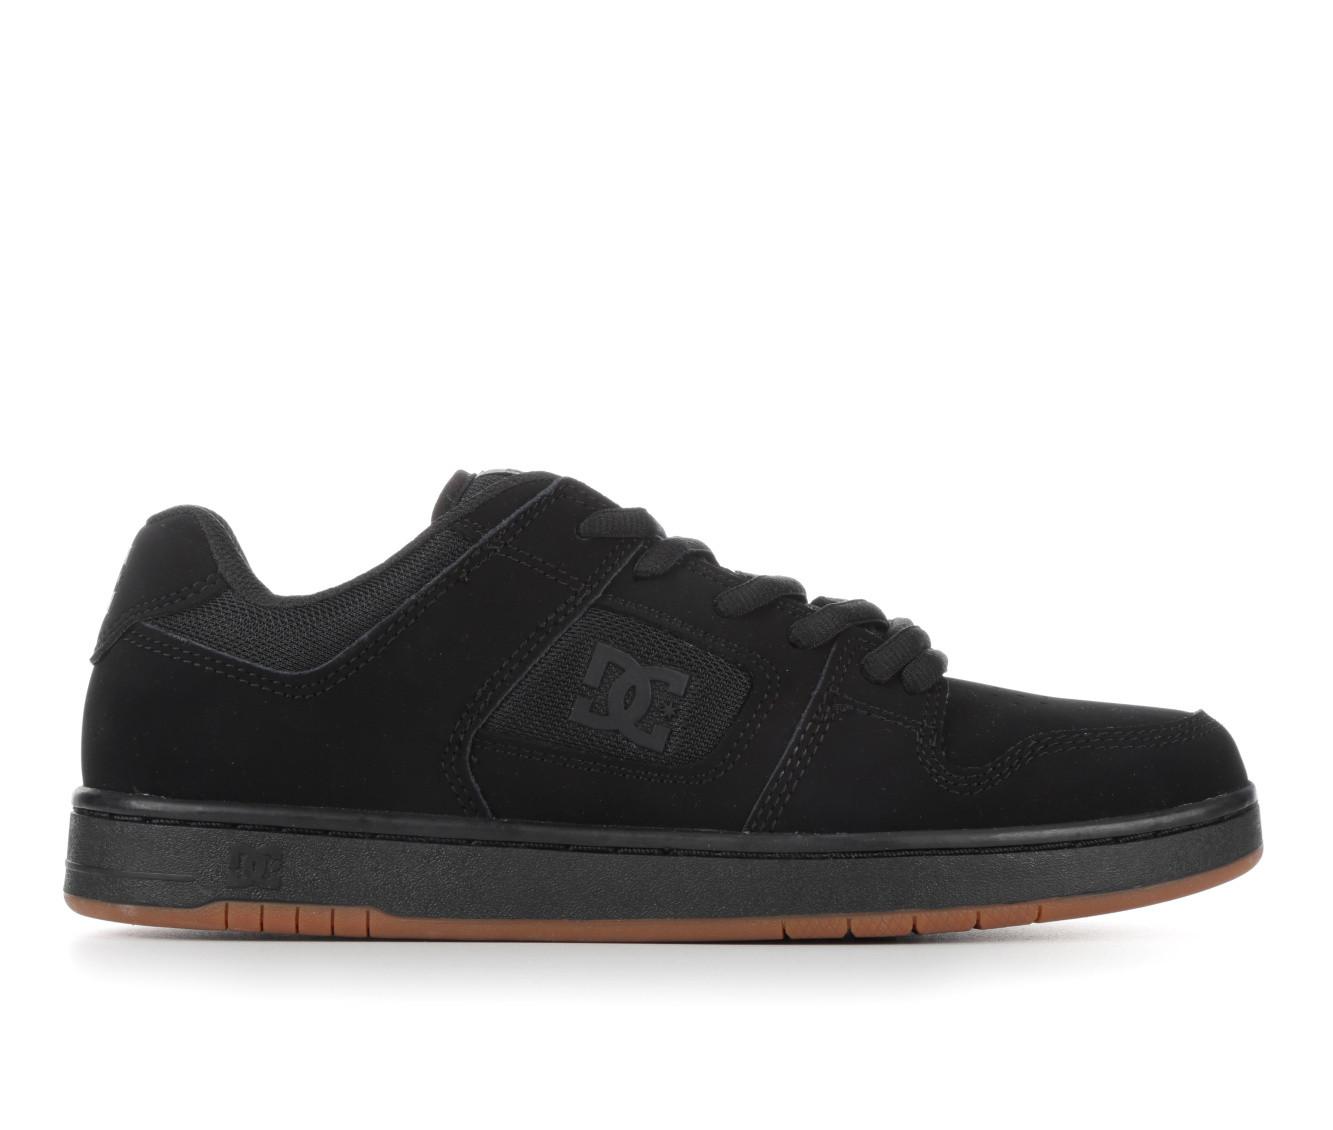  DC mens Anvil Casual Skate Shoe, Black/Black, 6 US